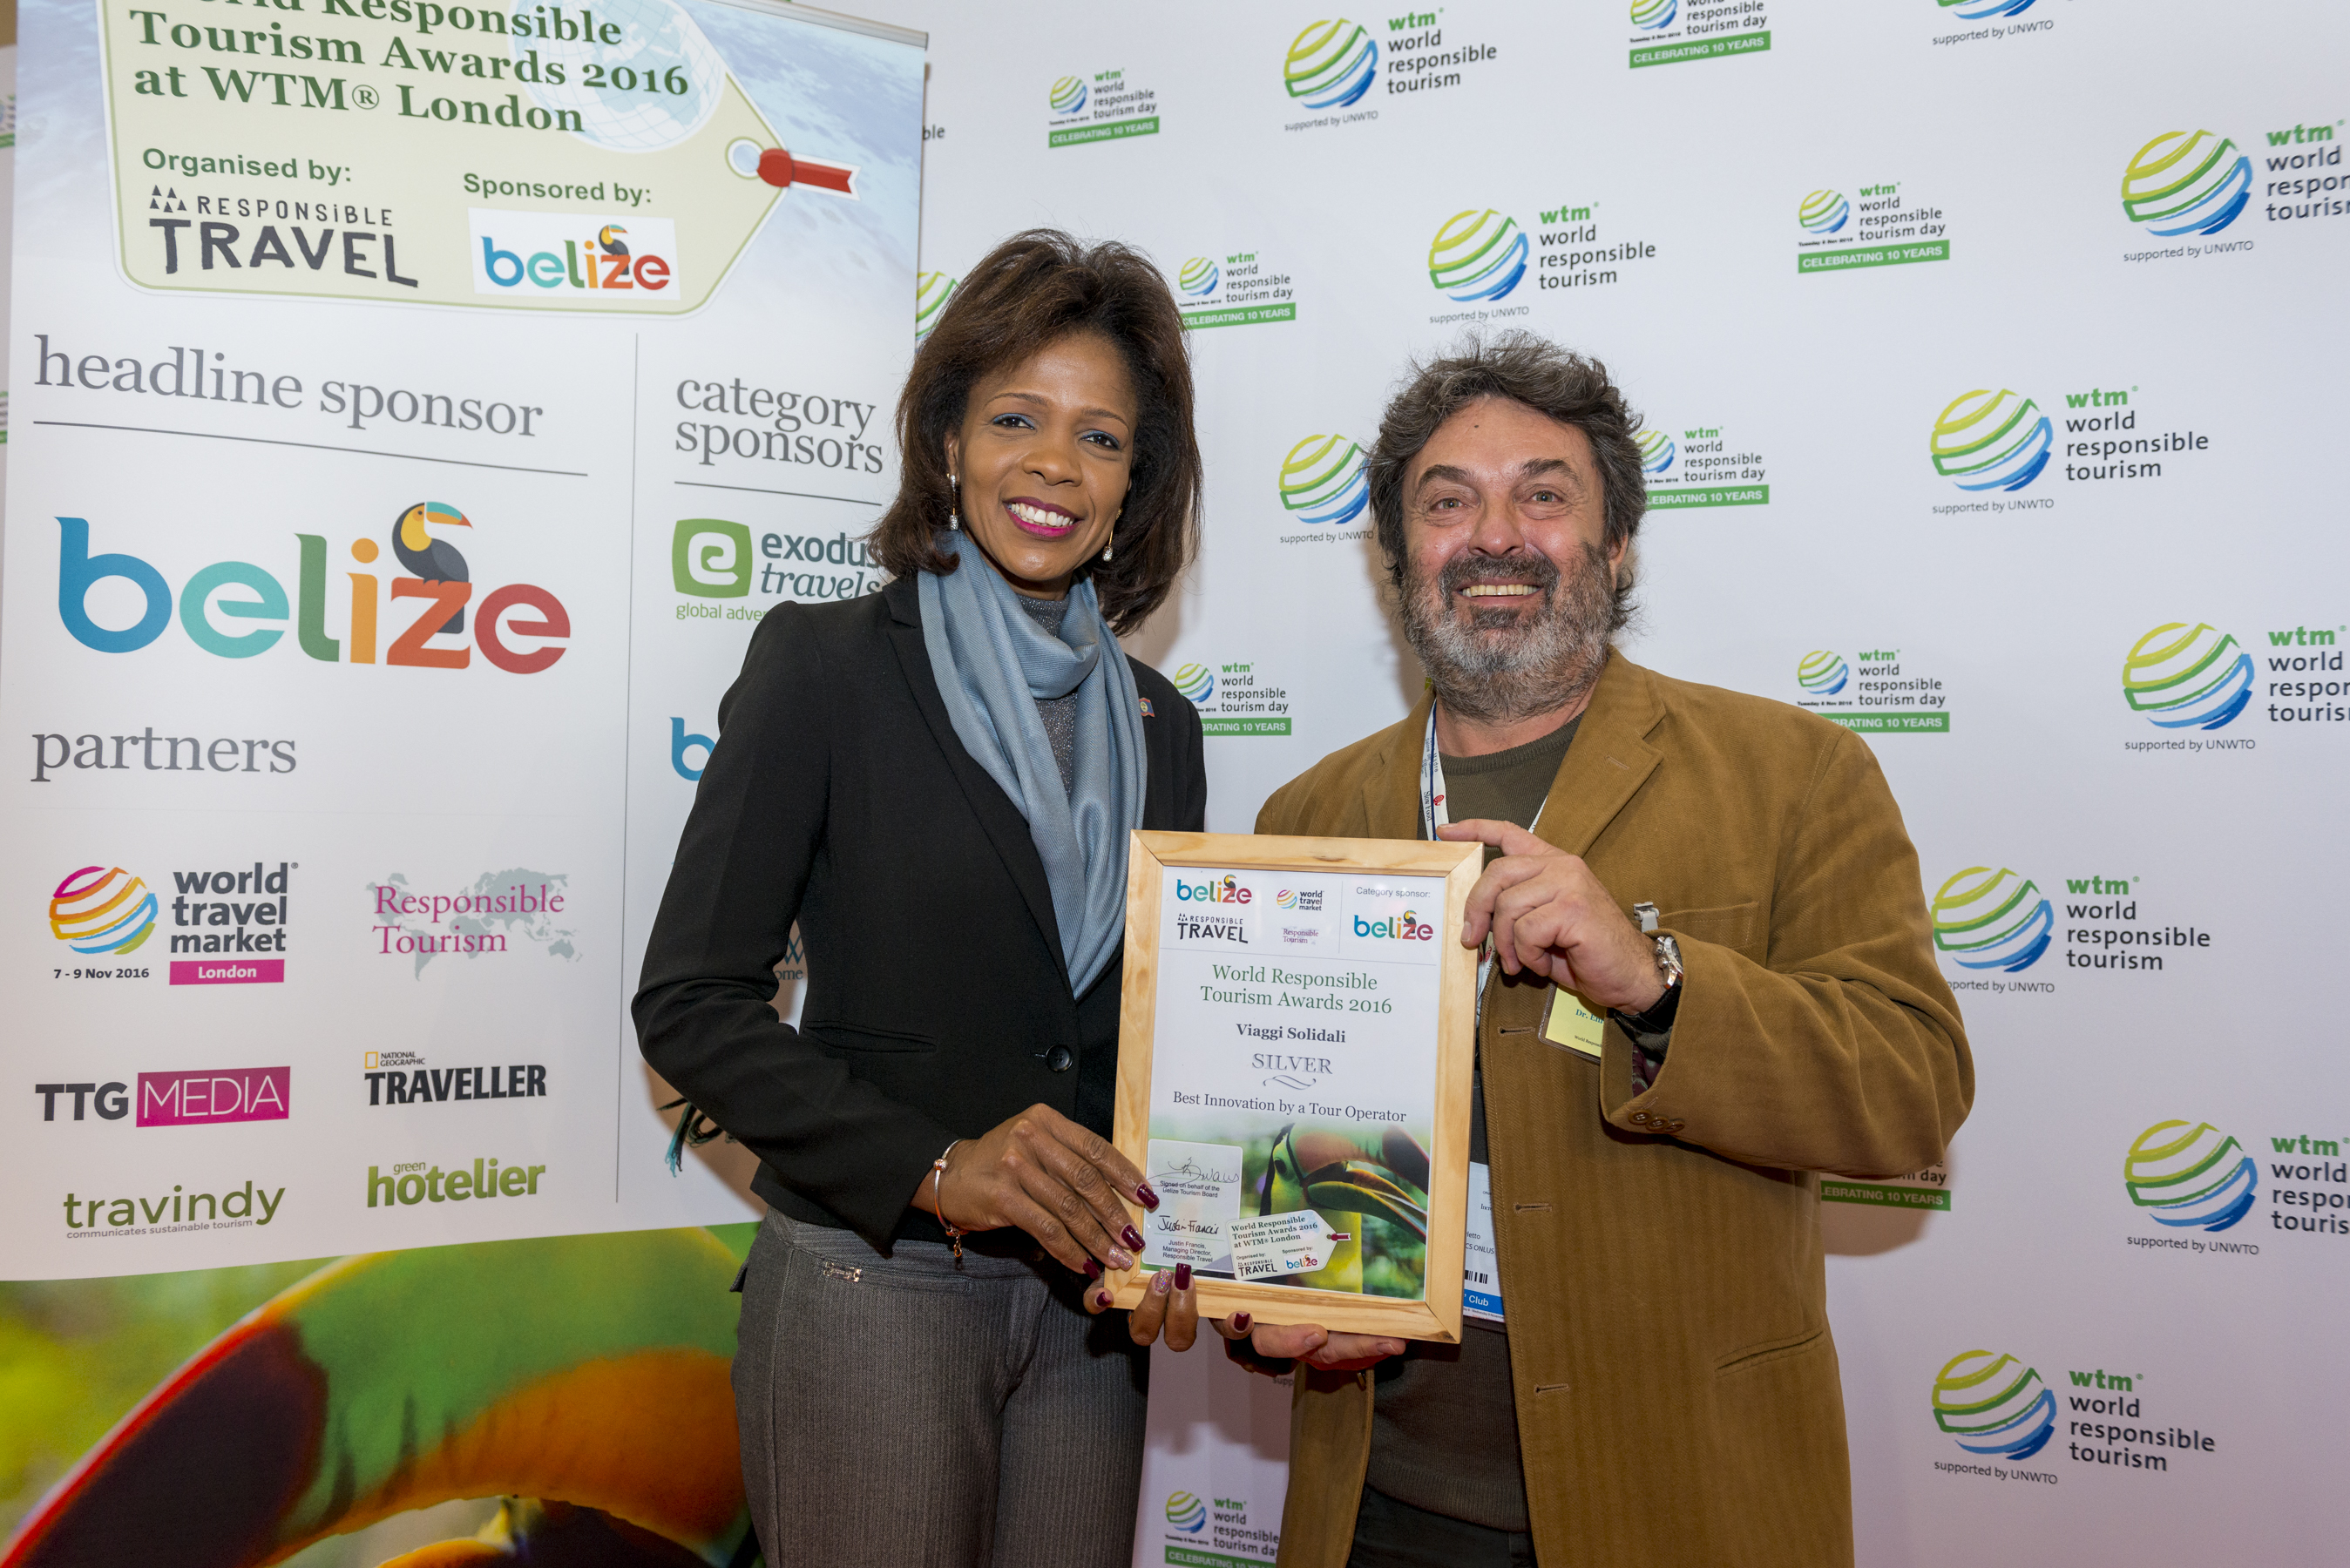 Migrantour  medaglia d’argento al World Responsible Tourism Award 2016